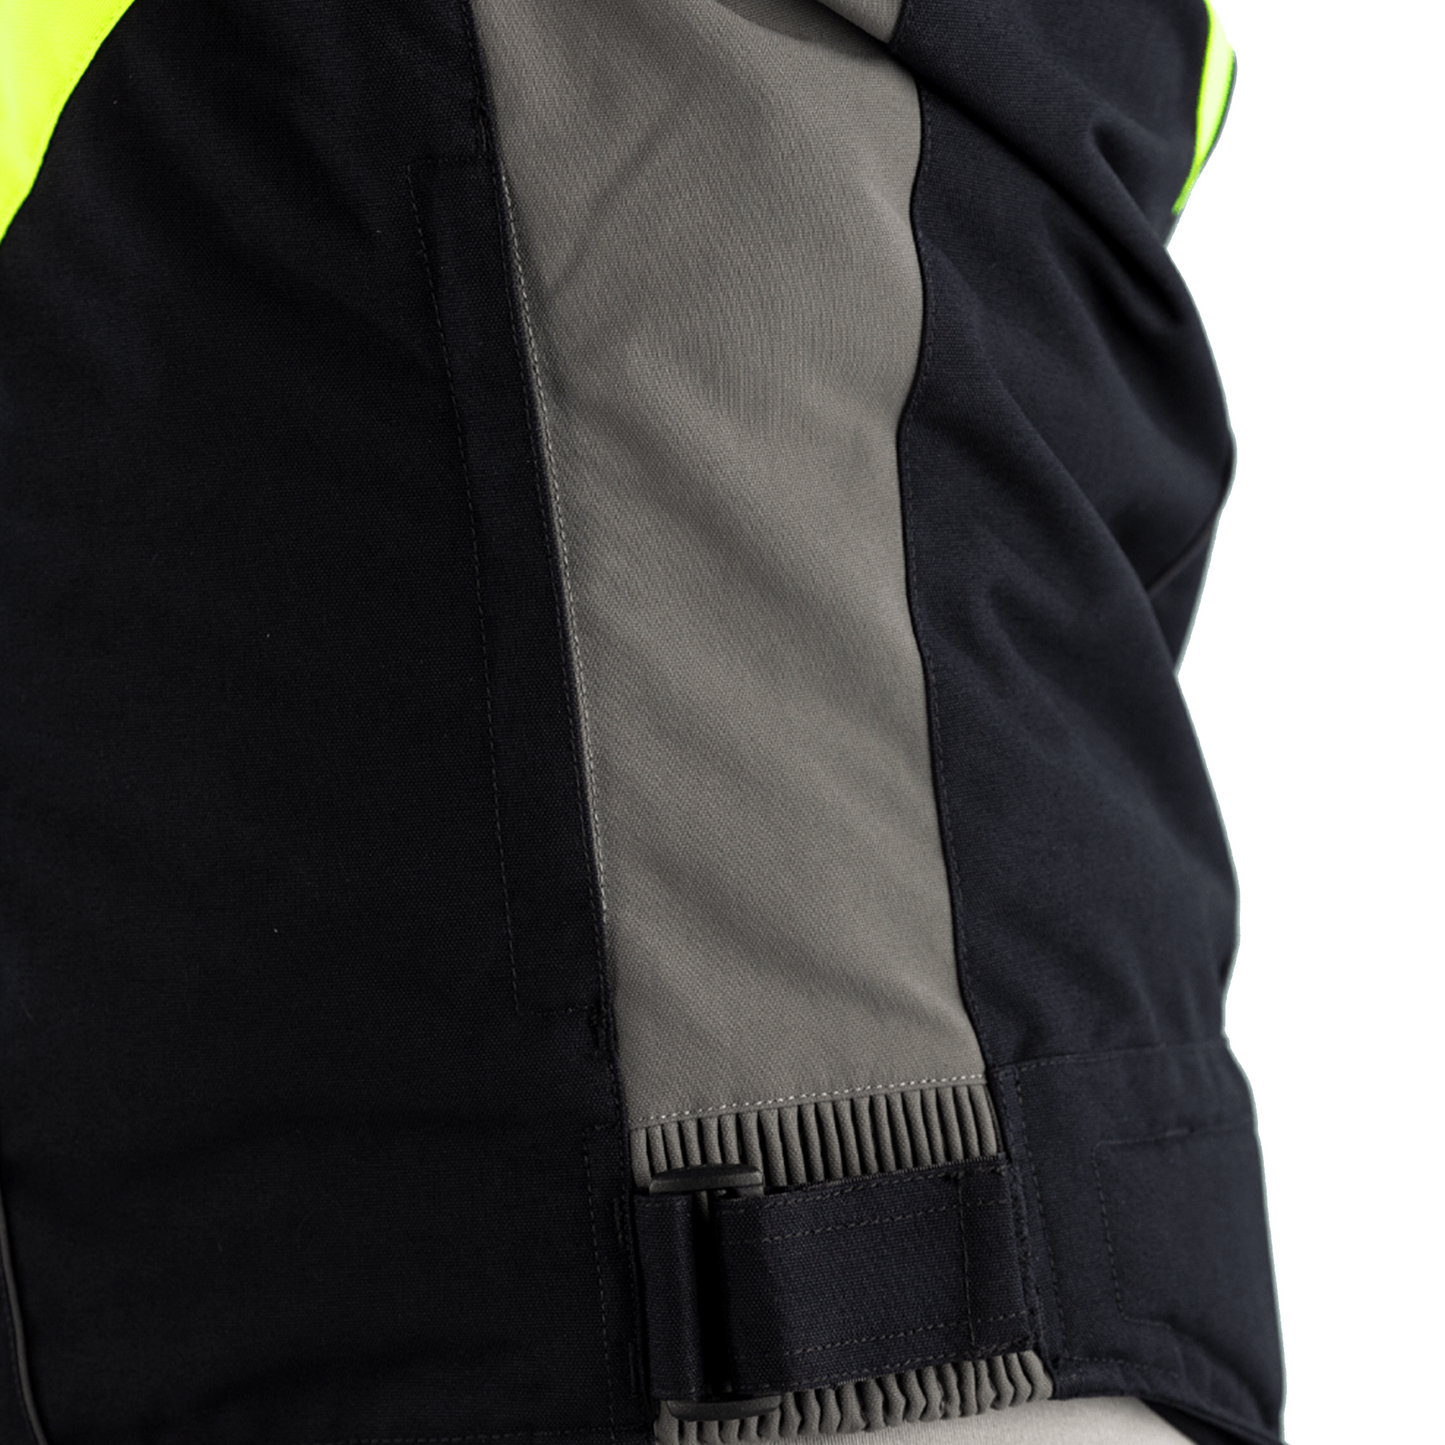 RST Sabre Textile Jacket - Flo Yellow (2556)